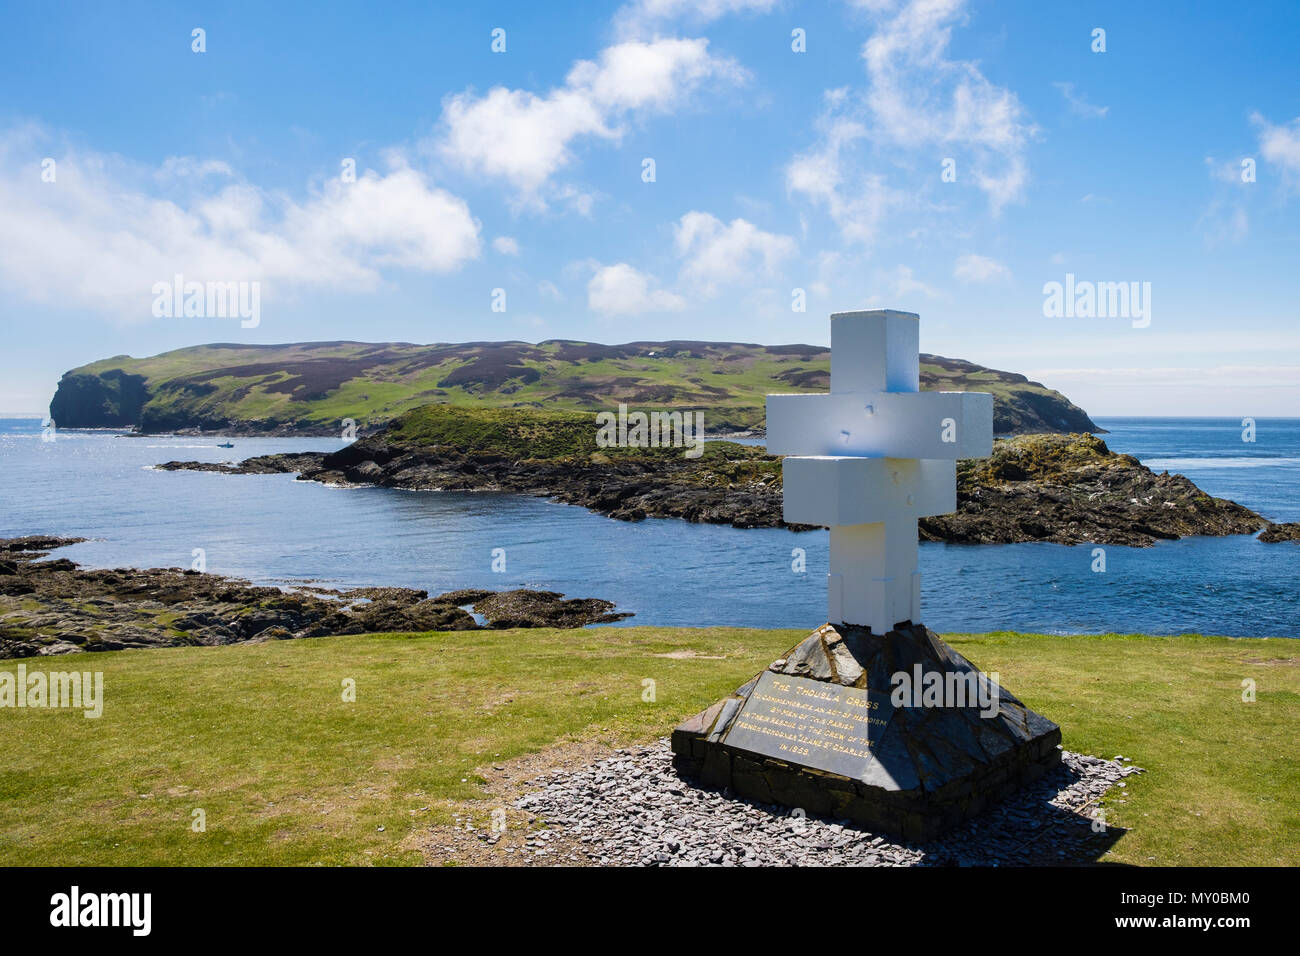 The Thousla Cross at southern tip on coast overlooking Calf of Man island across Calf Sound. Kitterland, Isle of Man, British Isles Stock Photo